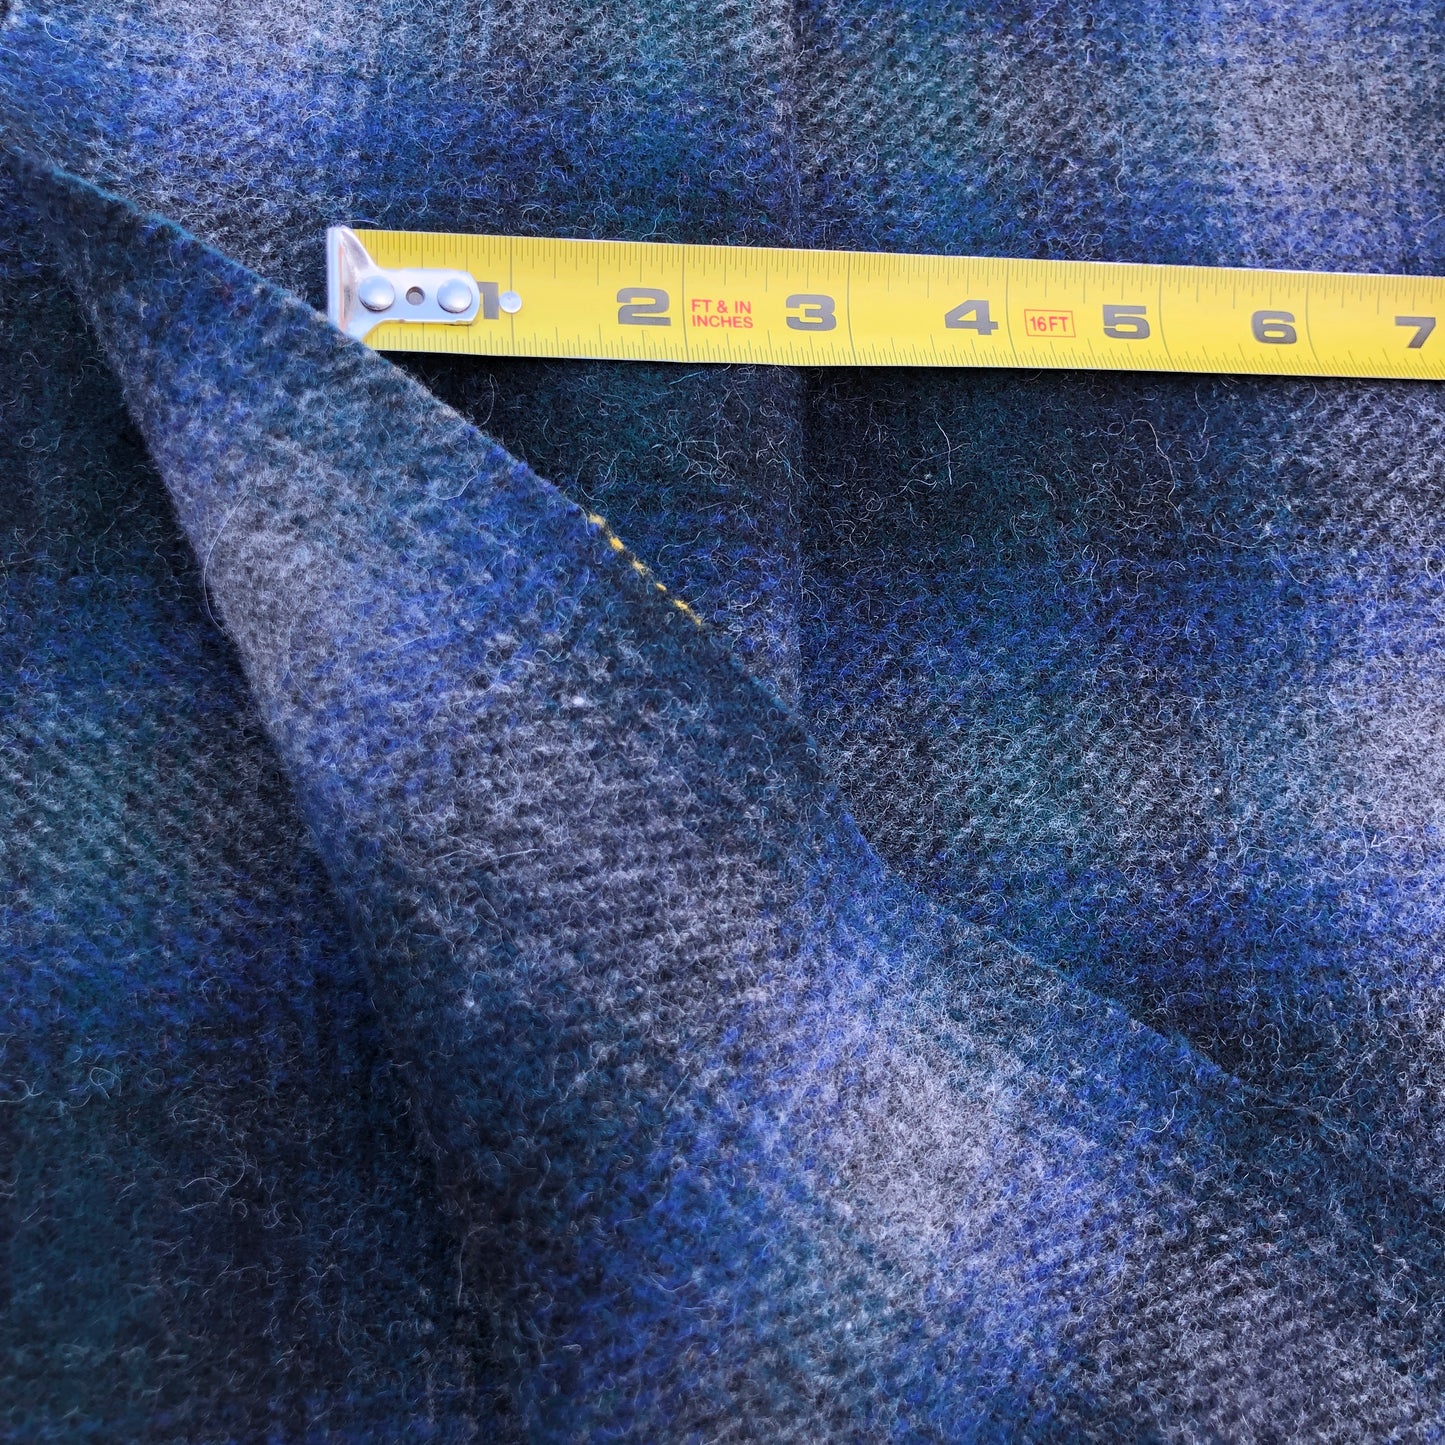 Blue/Teal Plaid Wool Fabric 32 x 52"